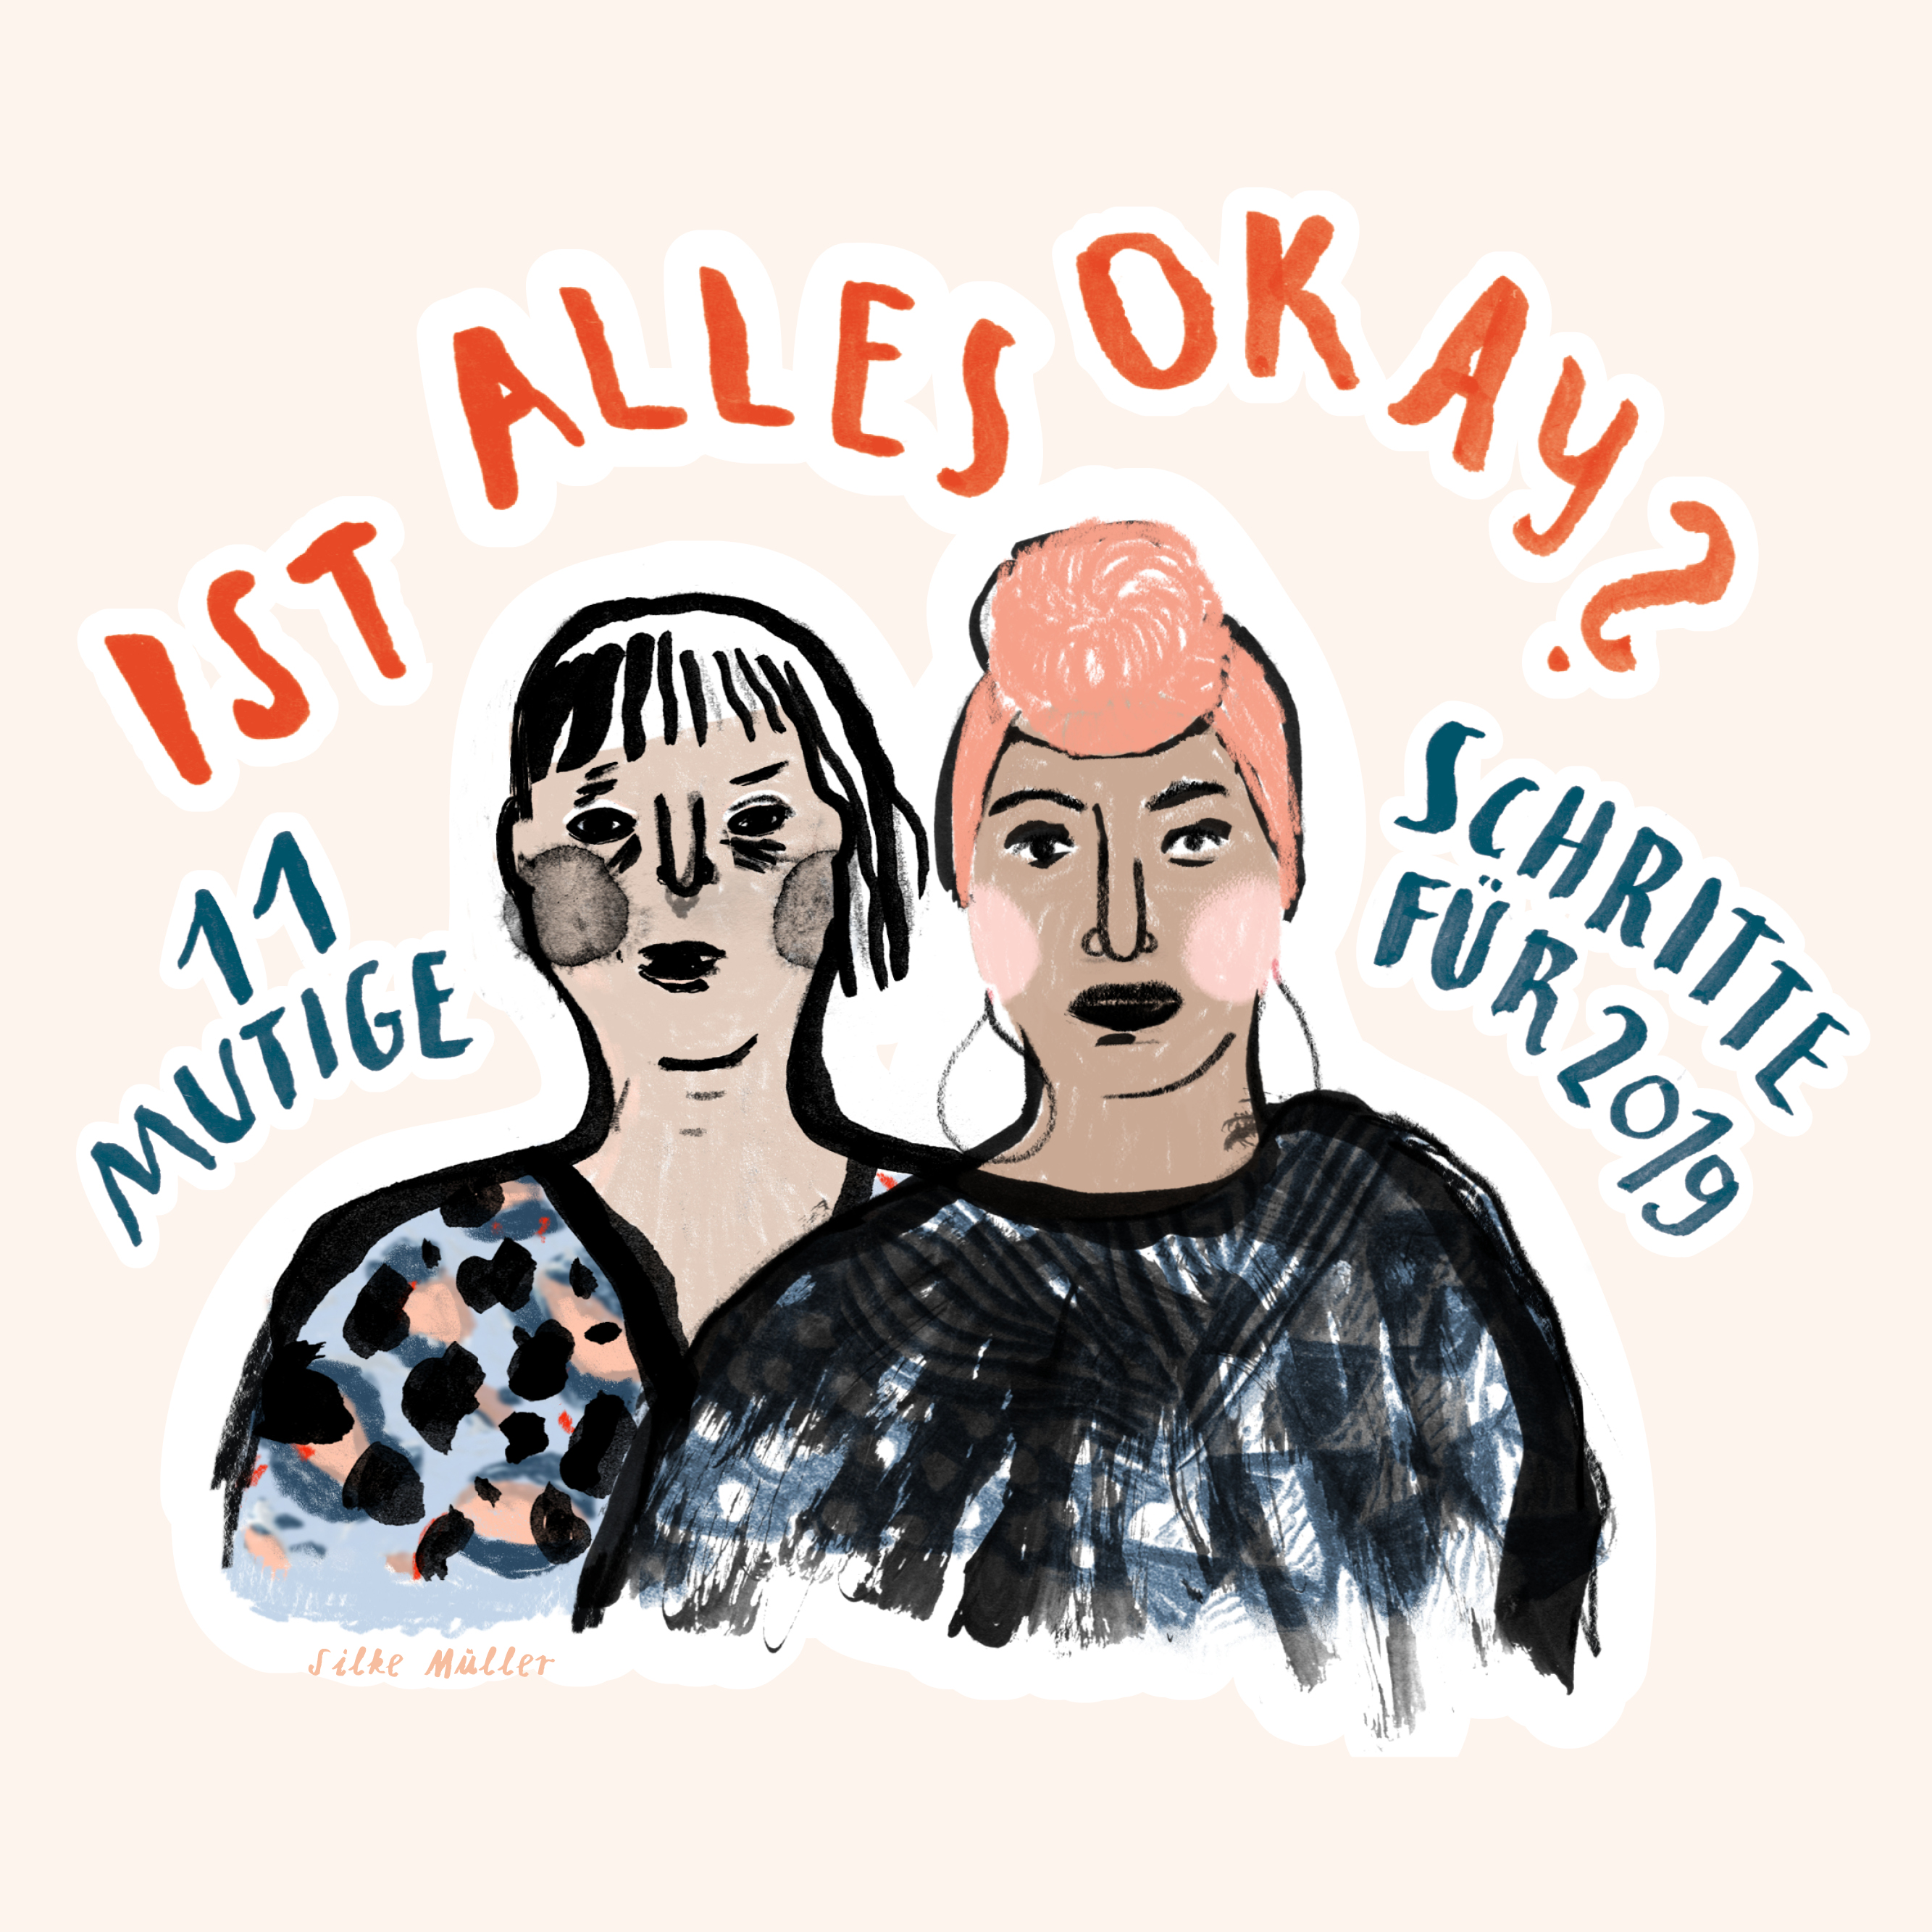 Alles Okay? - Kalender zur Zivilcourage 2019, Comic· Illustration © Silke Müller, Linz